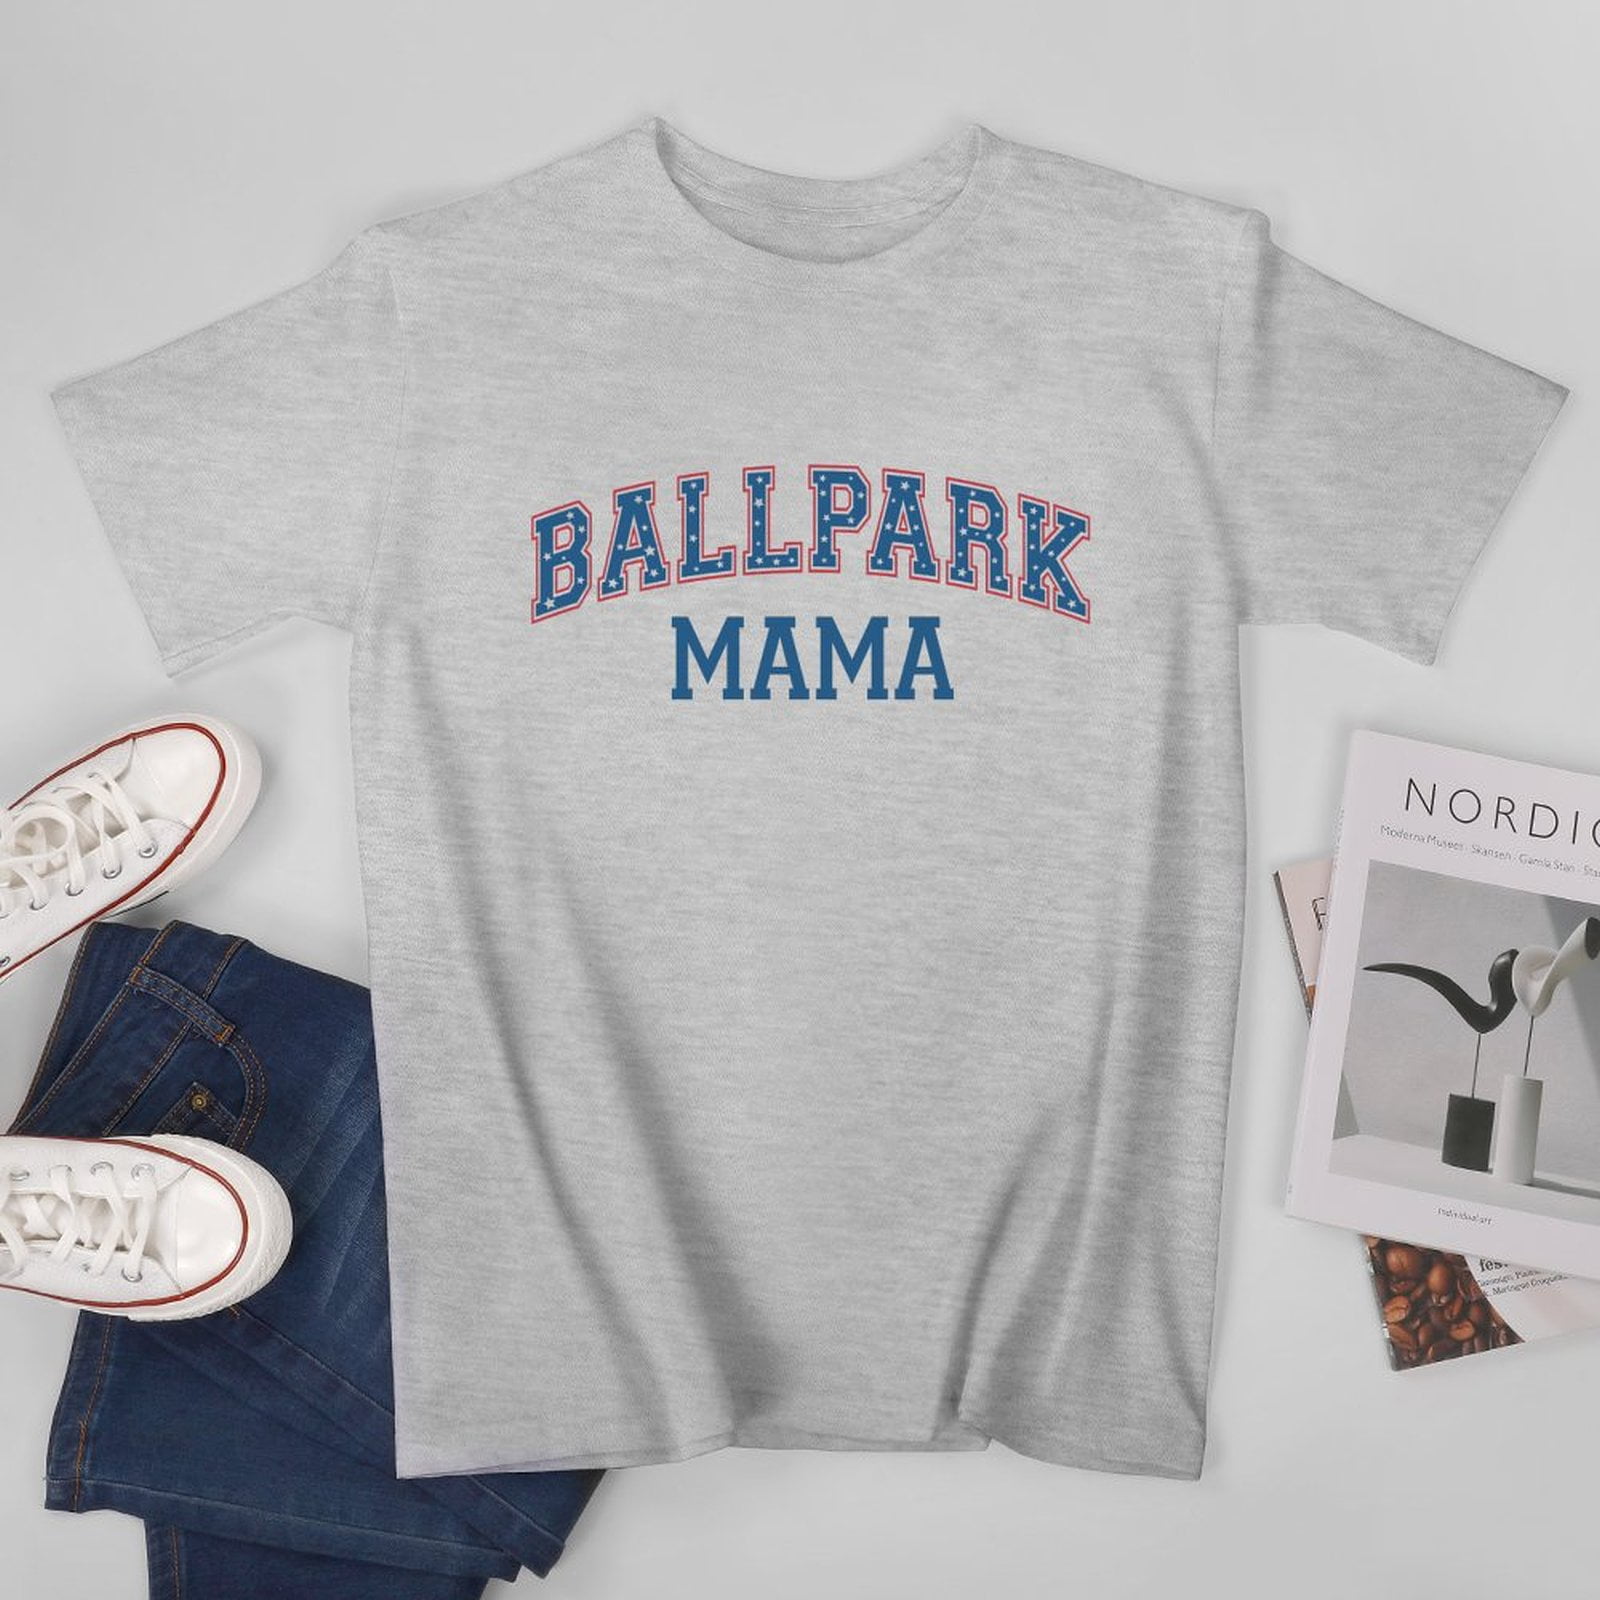 Charlylifestyle Unisex Baseball Ballpark Mama Short Sleeve T-shirt for ...